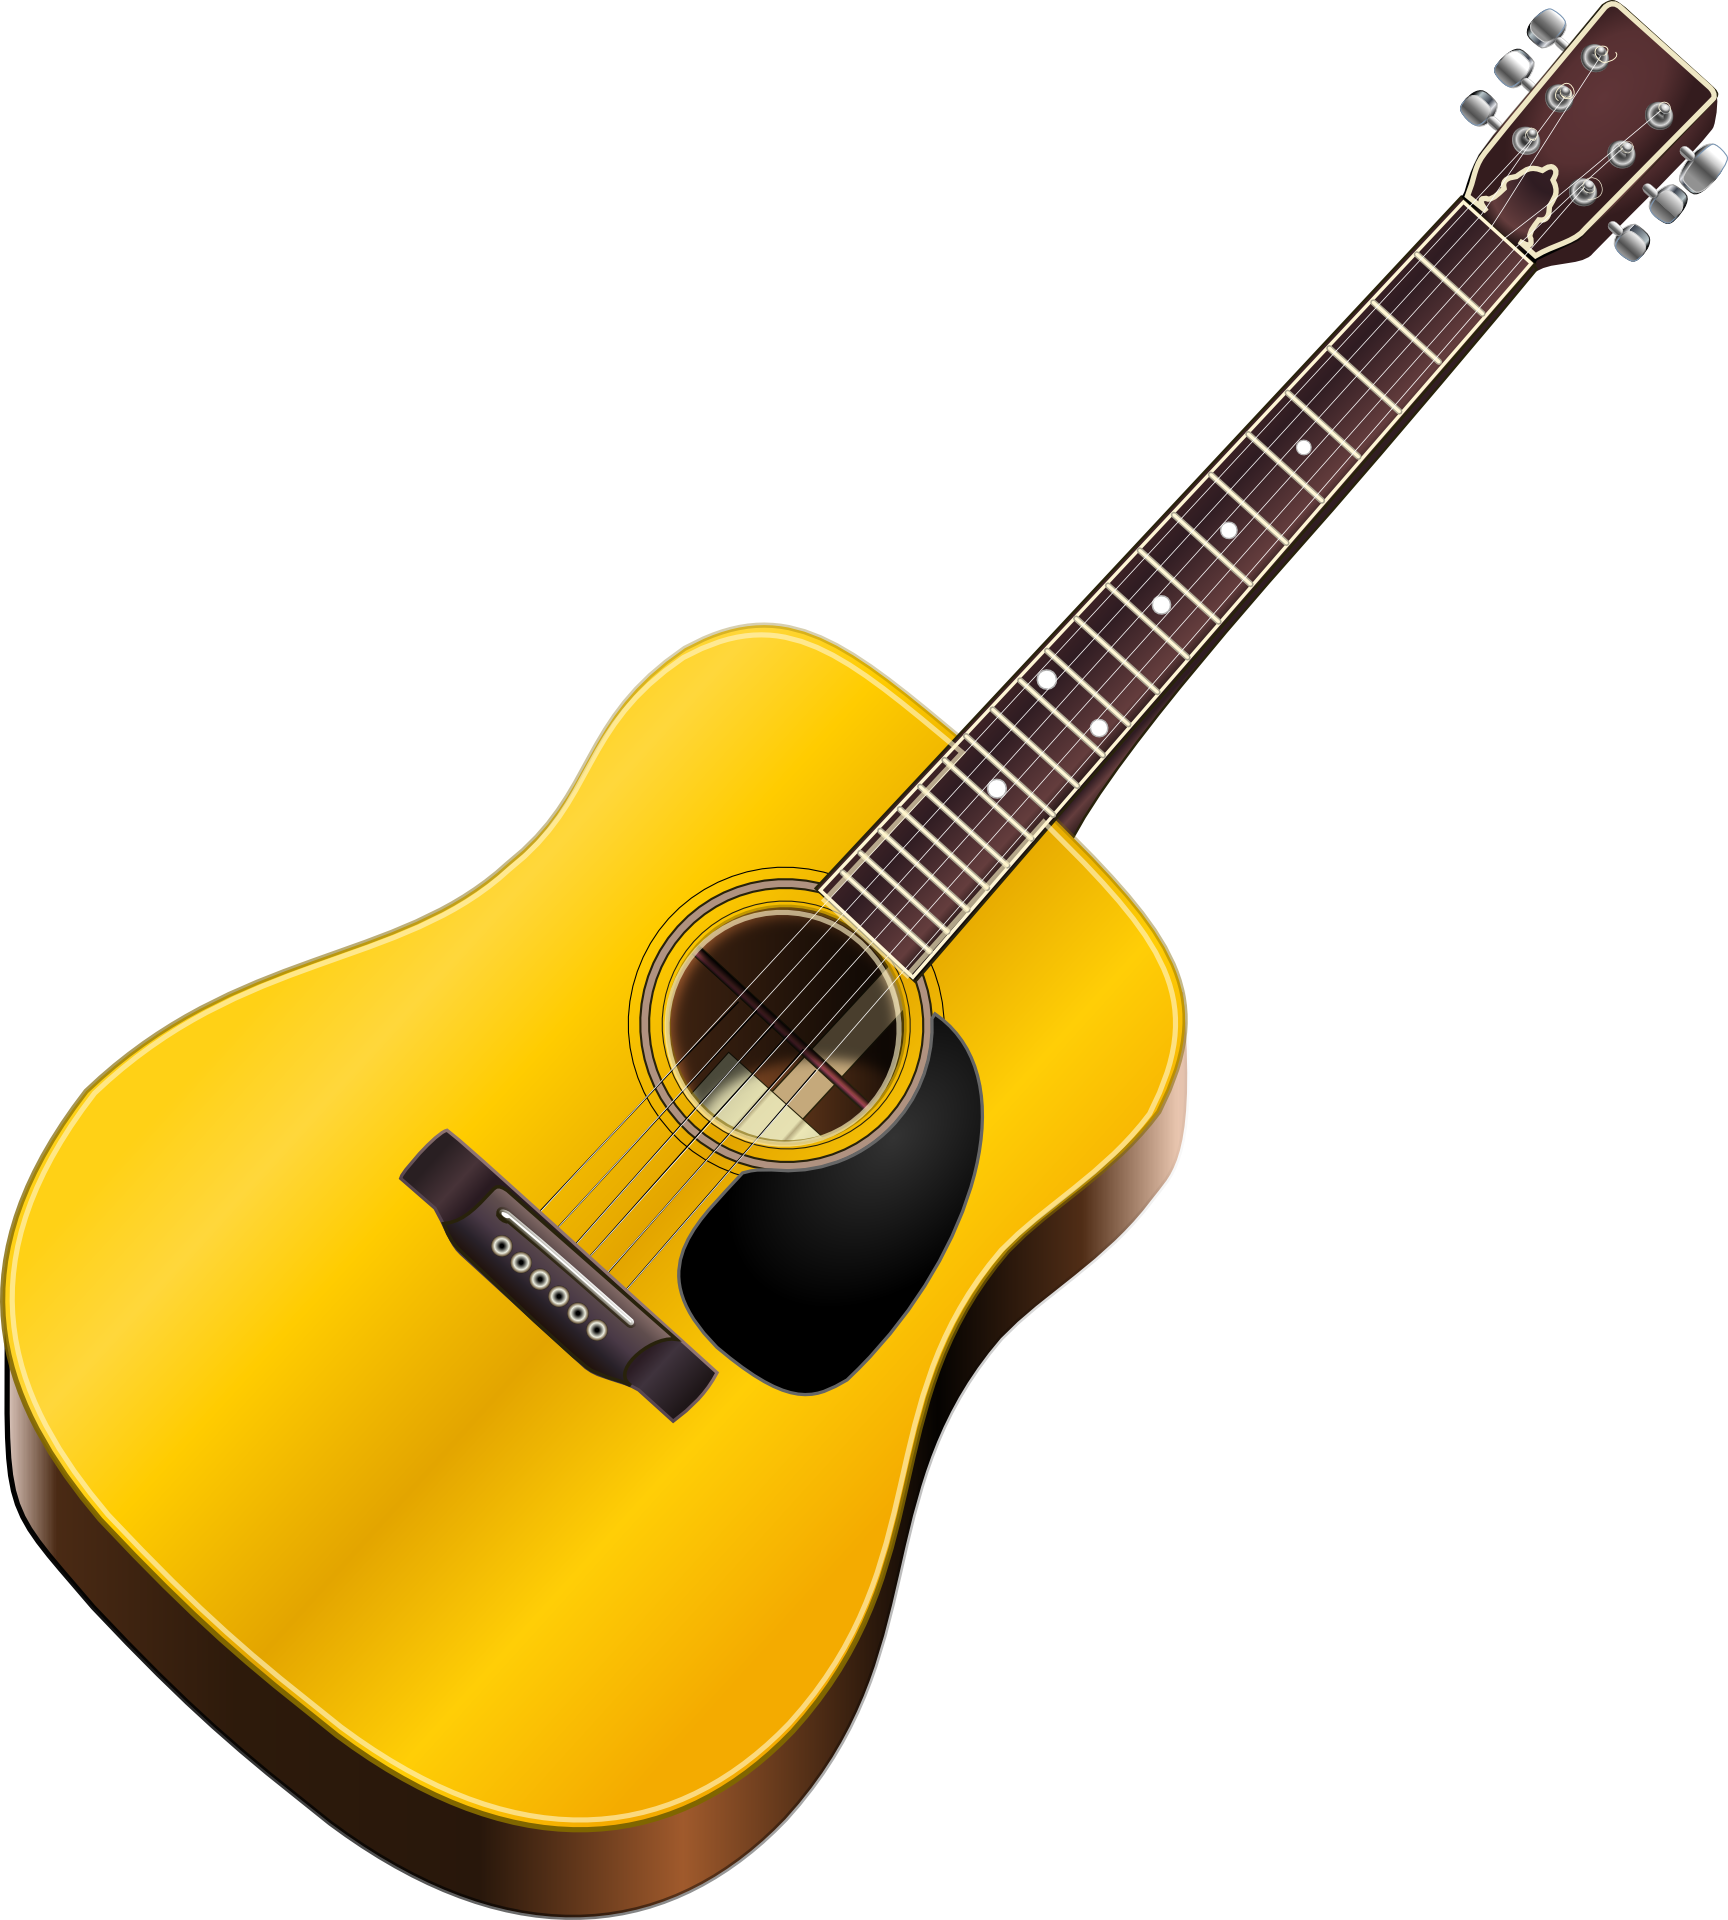 Guitar Png Image - Guitar, Transparent background PNG HD thumbnail